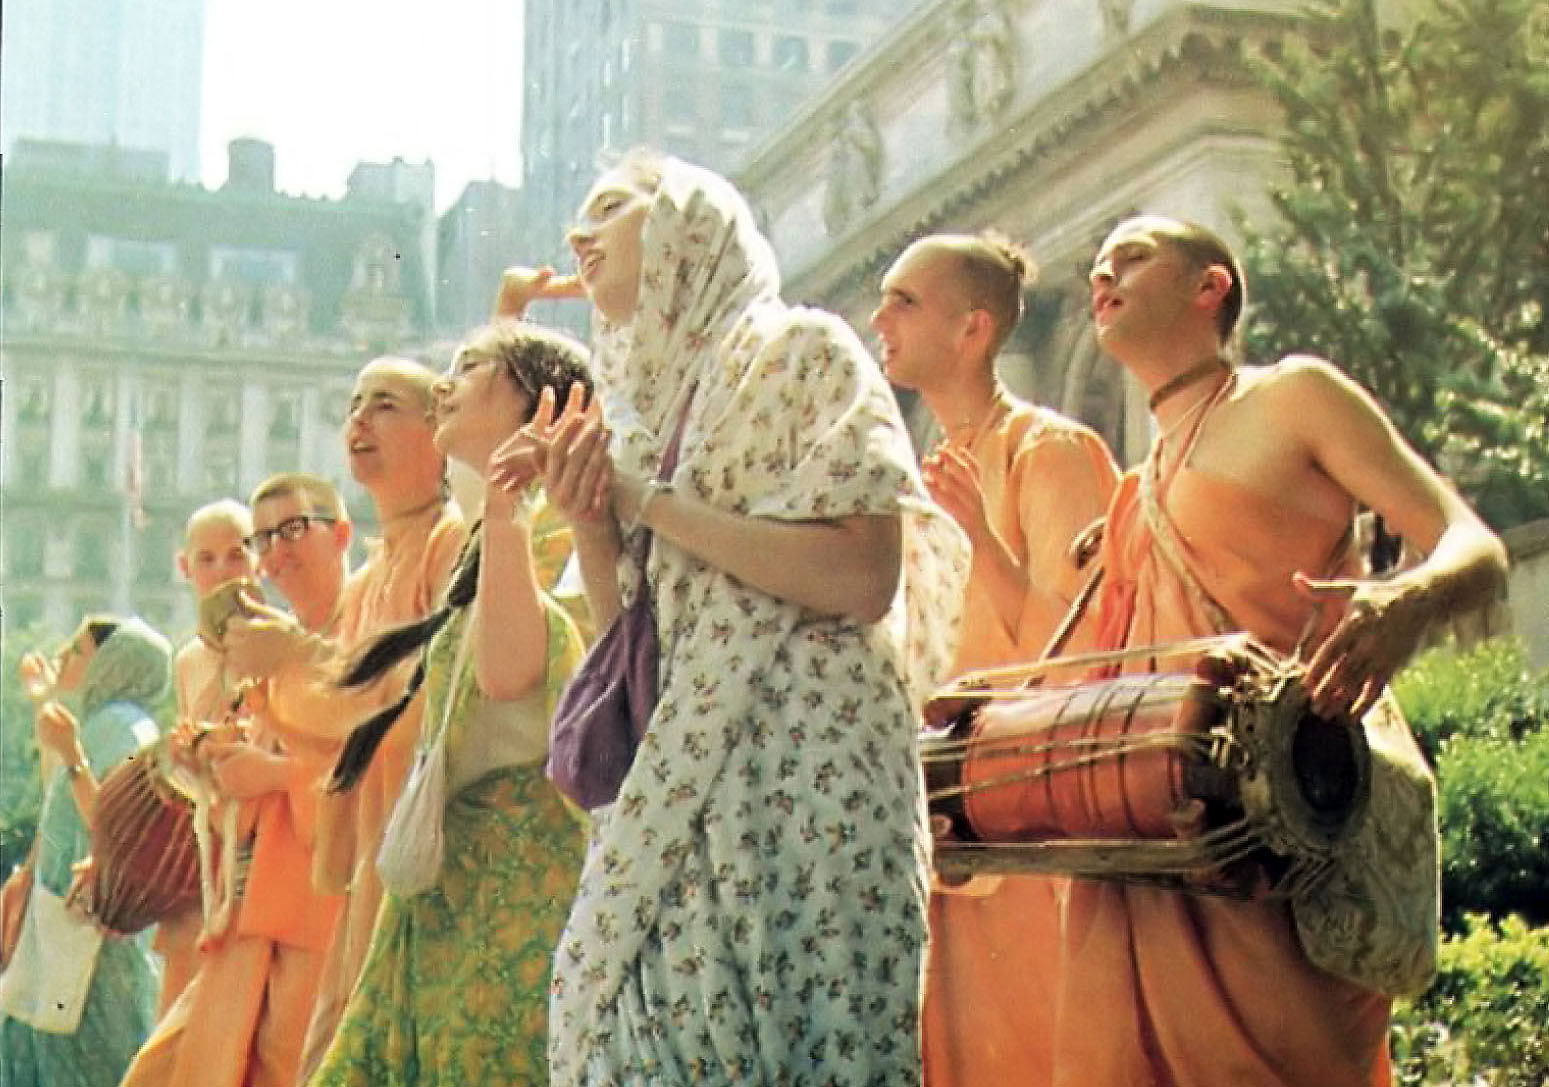 Hare Krishnas Chanting in the Seventies.